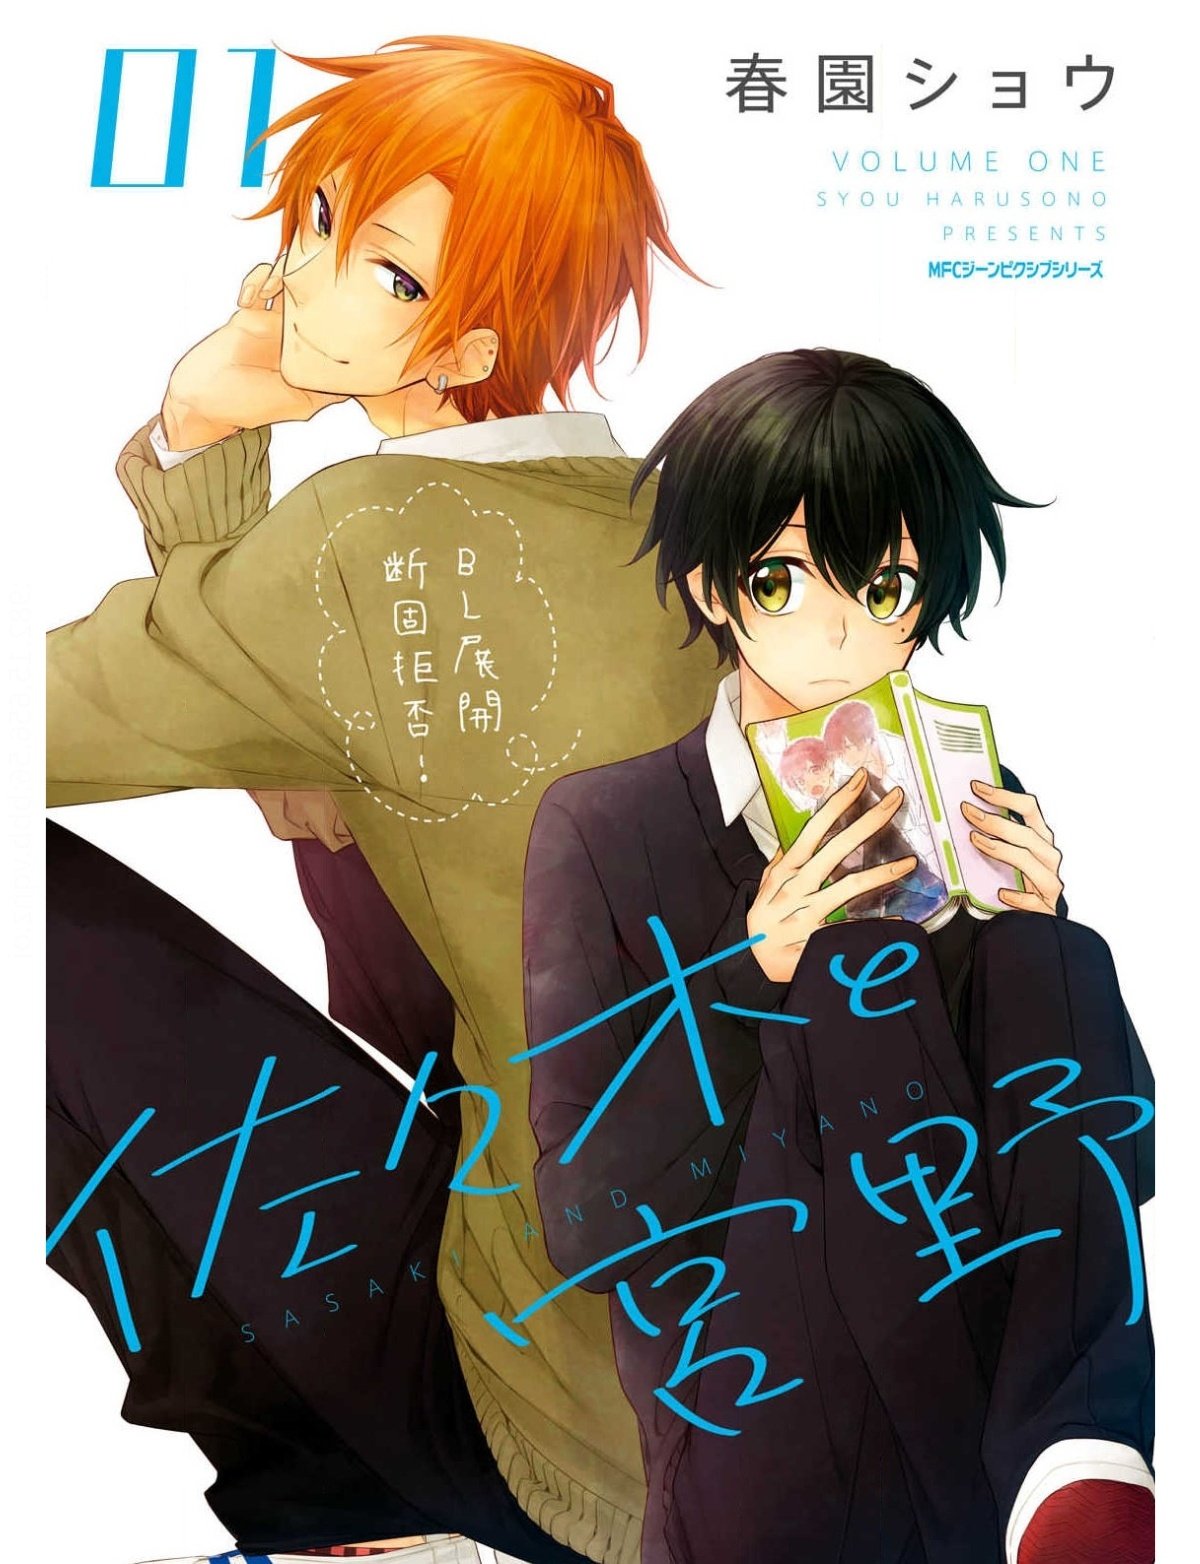 Sasaki and Miyano: Anime Boys Love tem estreia marcada para